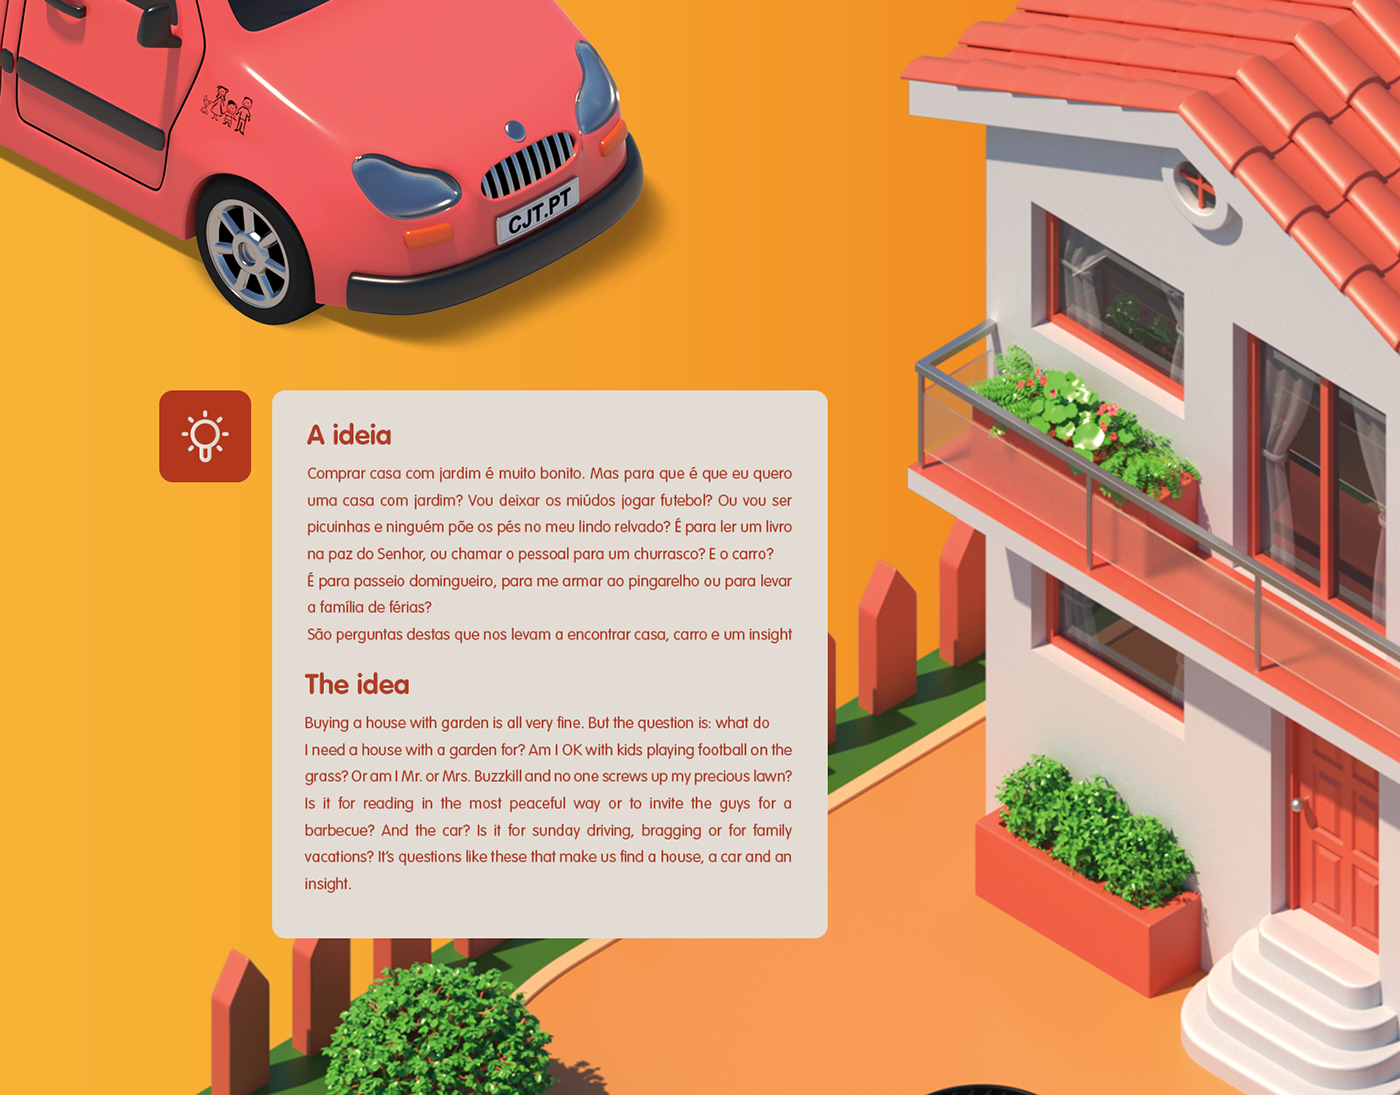 car 3D Advertisign publicidade Busca custo justo house ilustration design ad